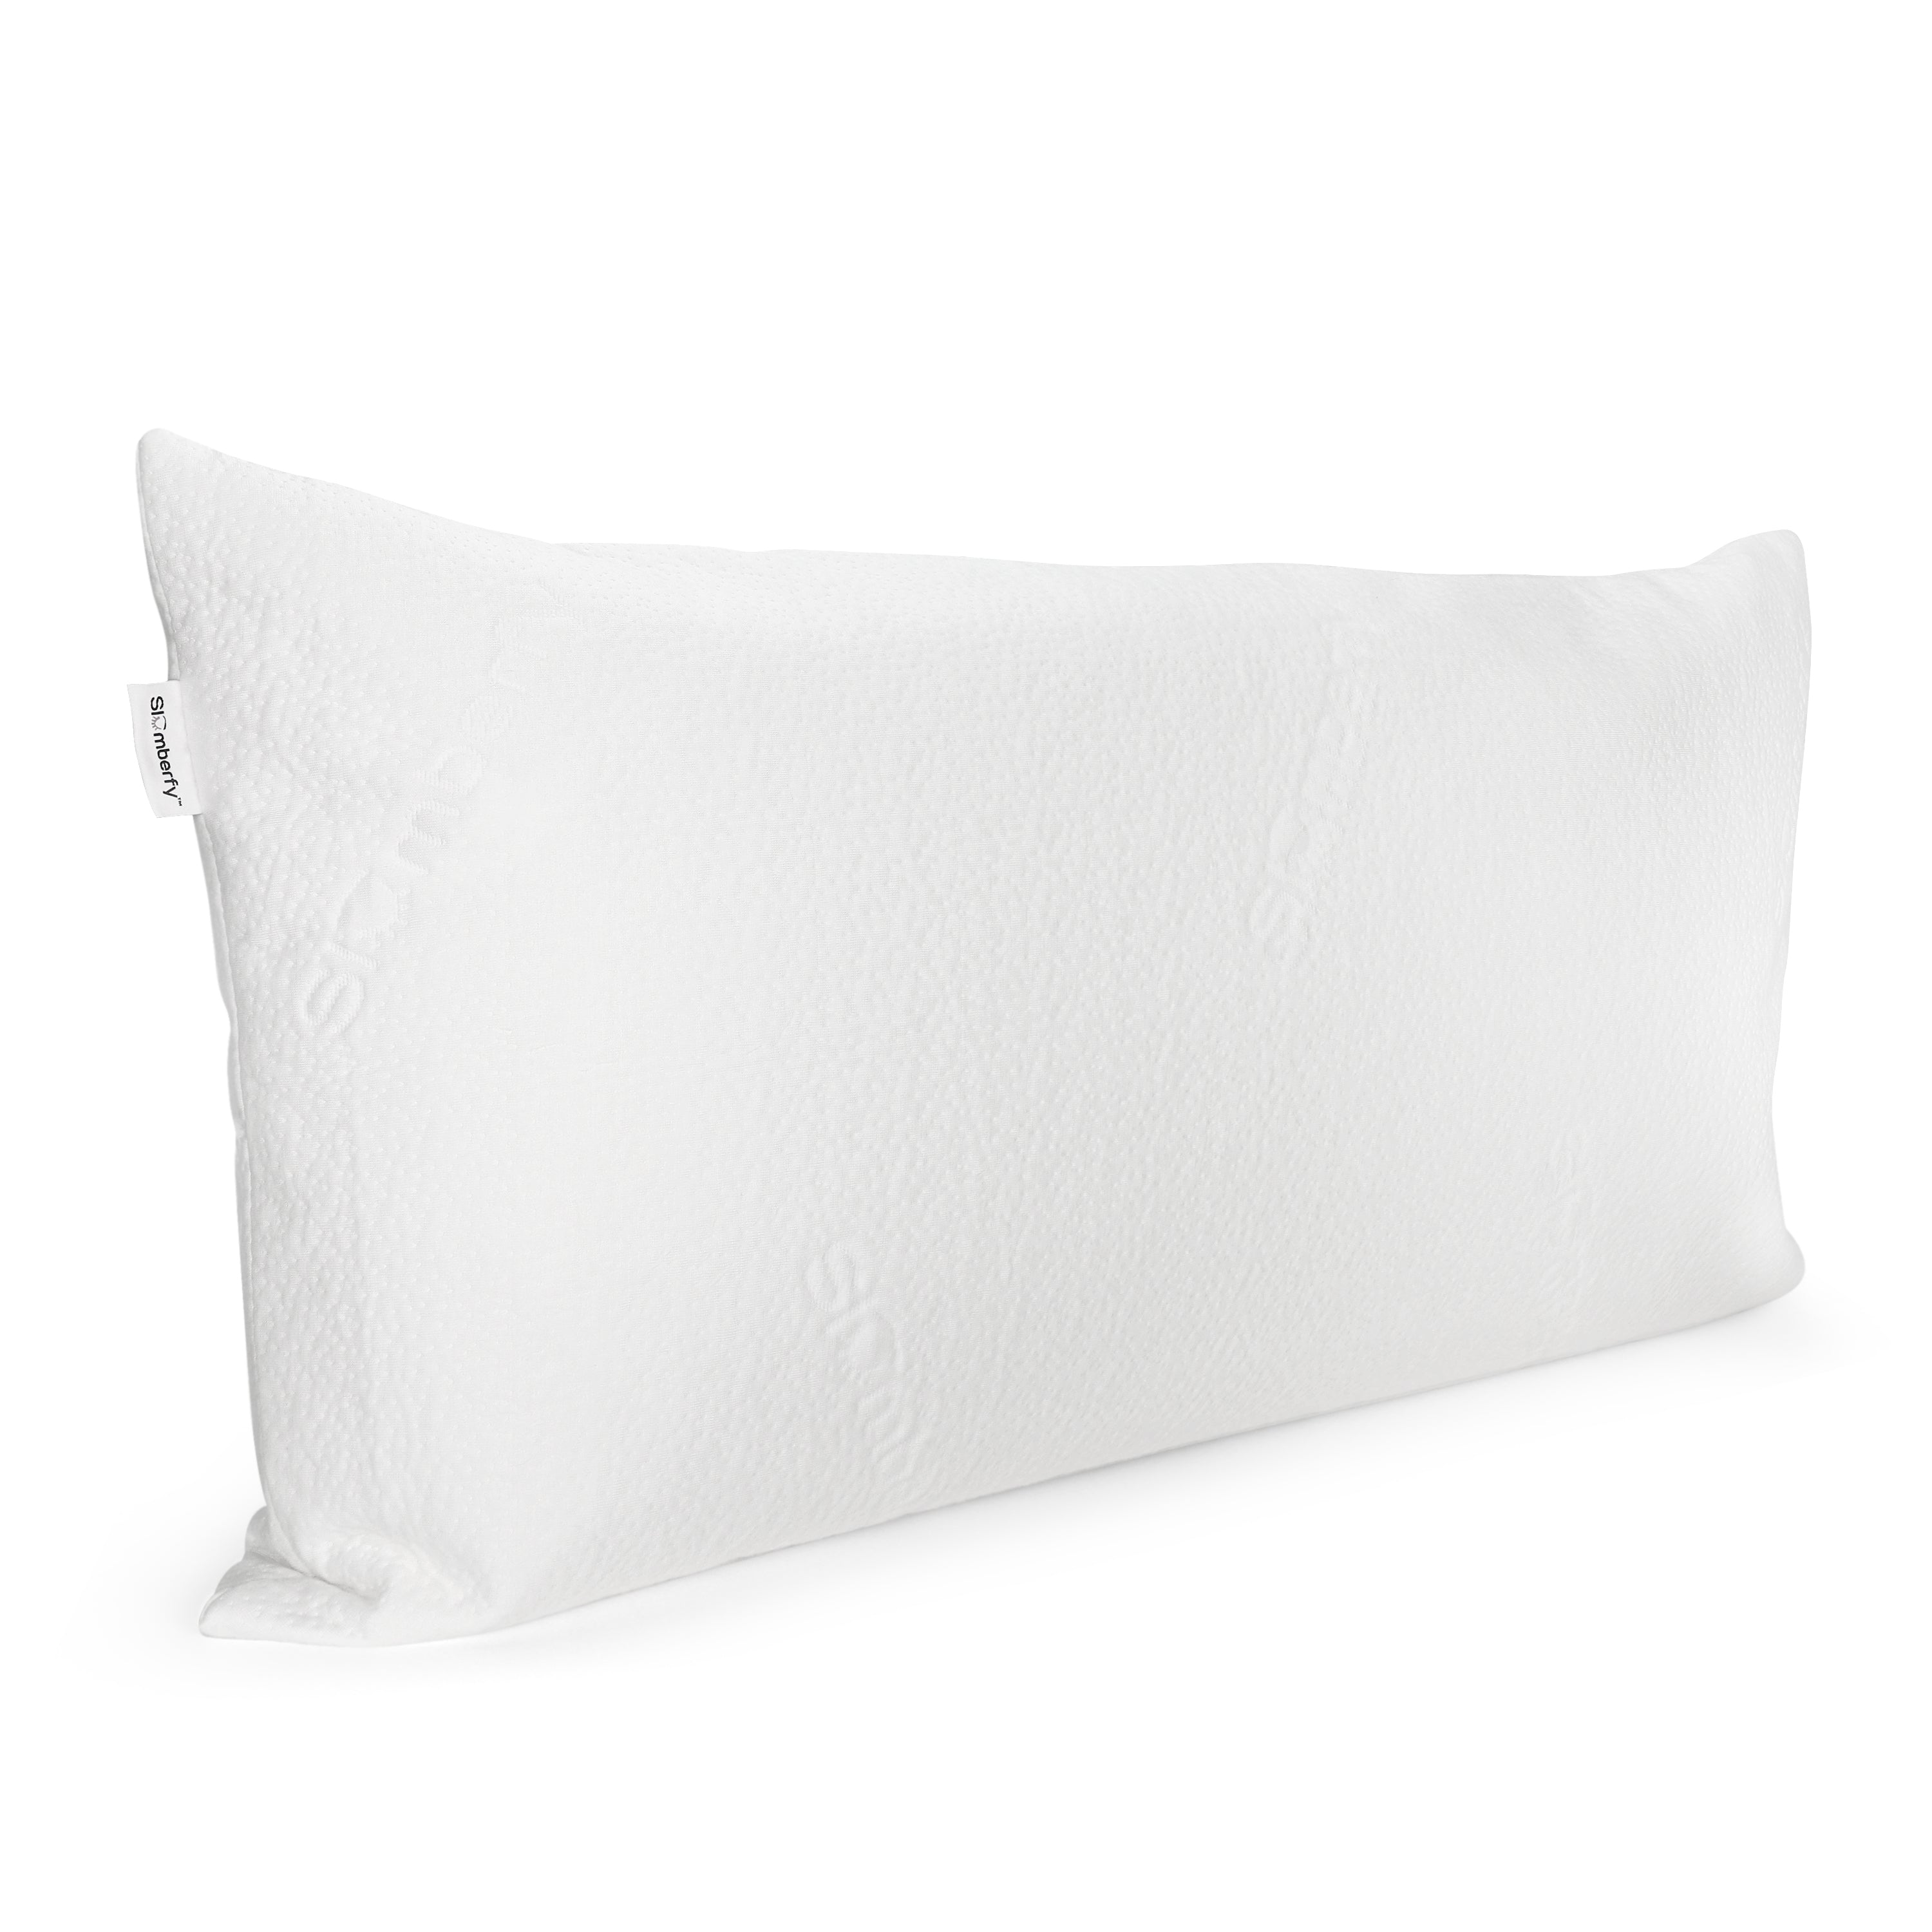 4 Pack Waterproof Pillow Protectors Standard 20x26 Inches Smooth Zipper  Premium Encasement Covers Quiet Cases Set White 100% Liquid Protection